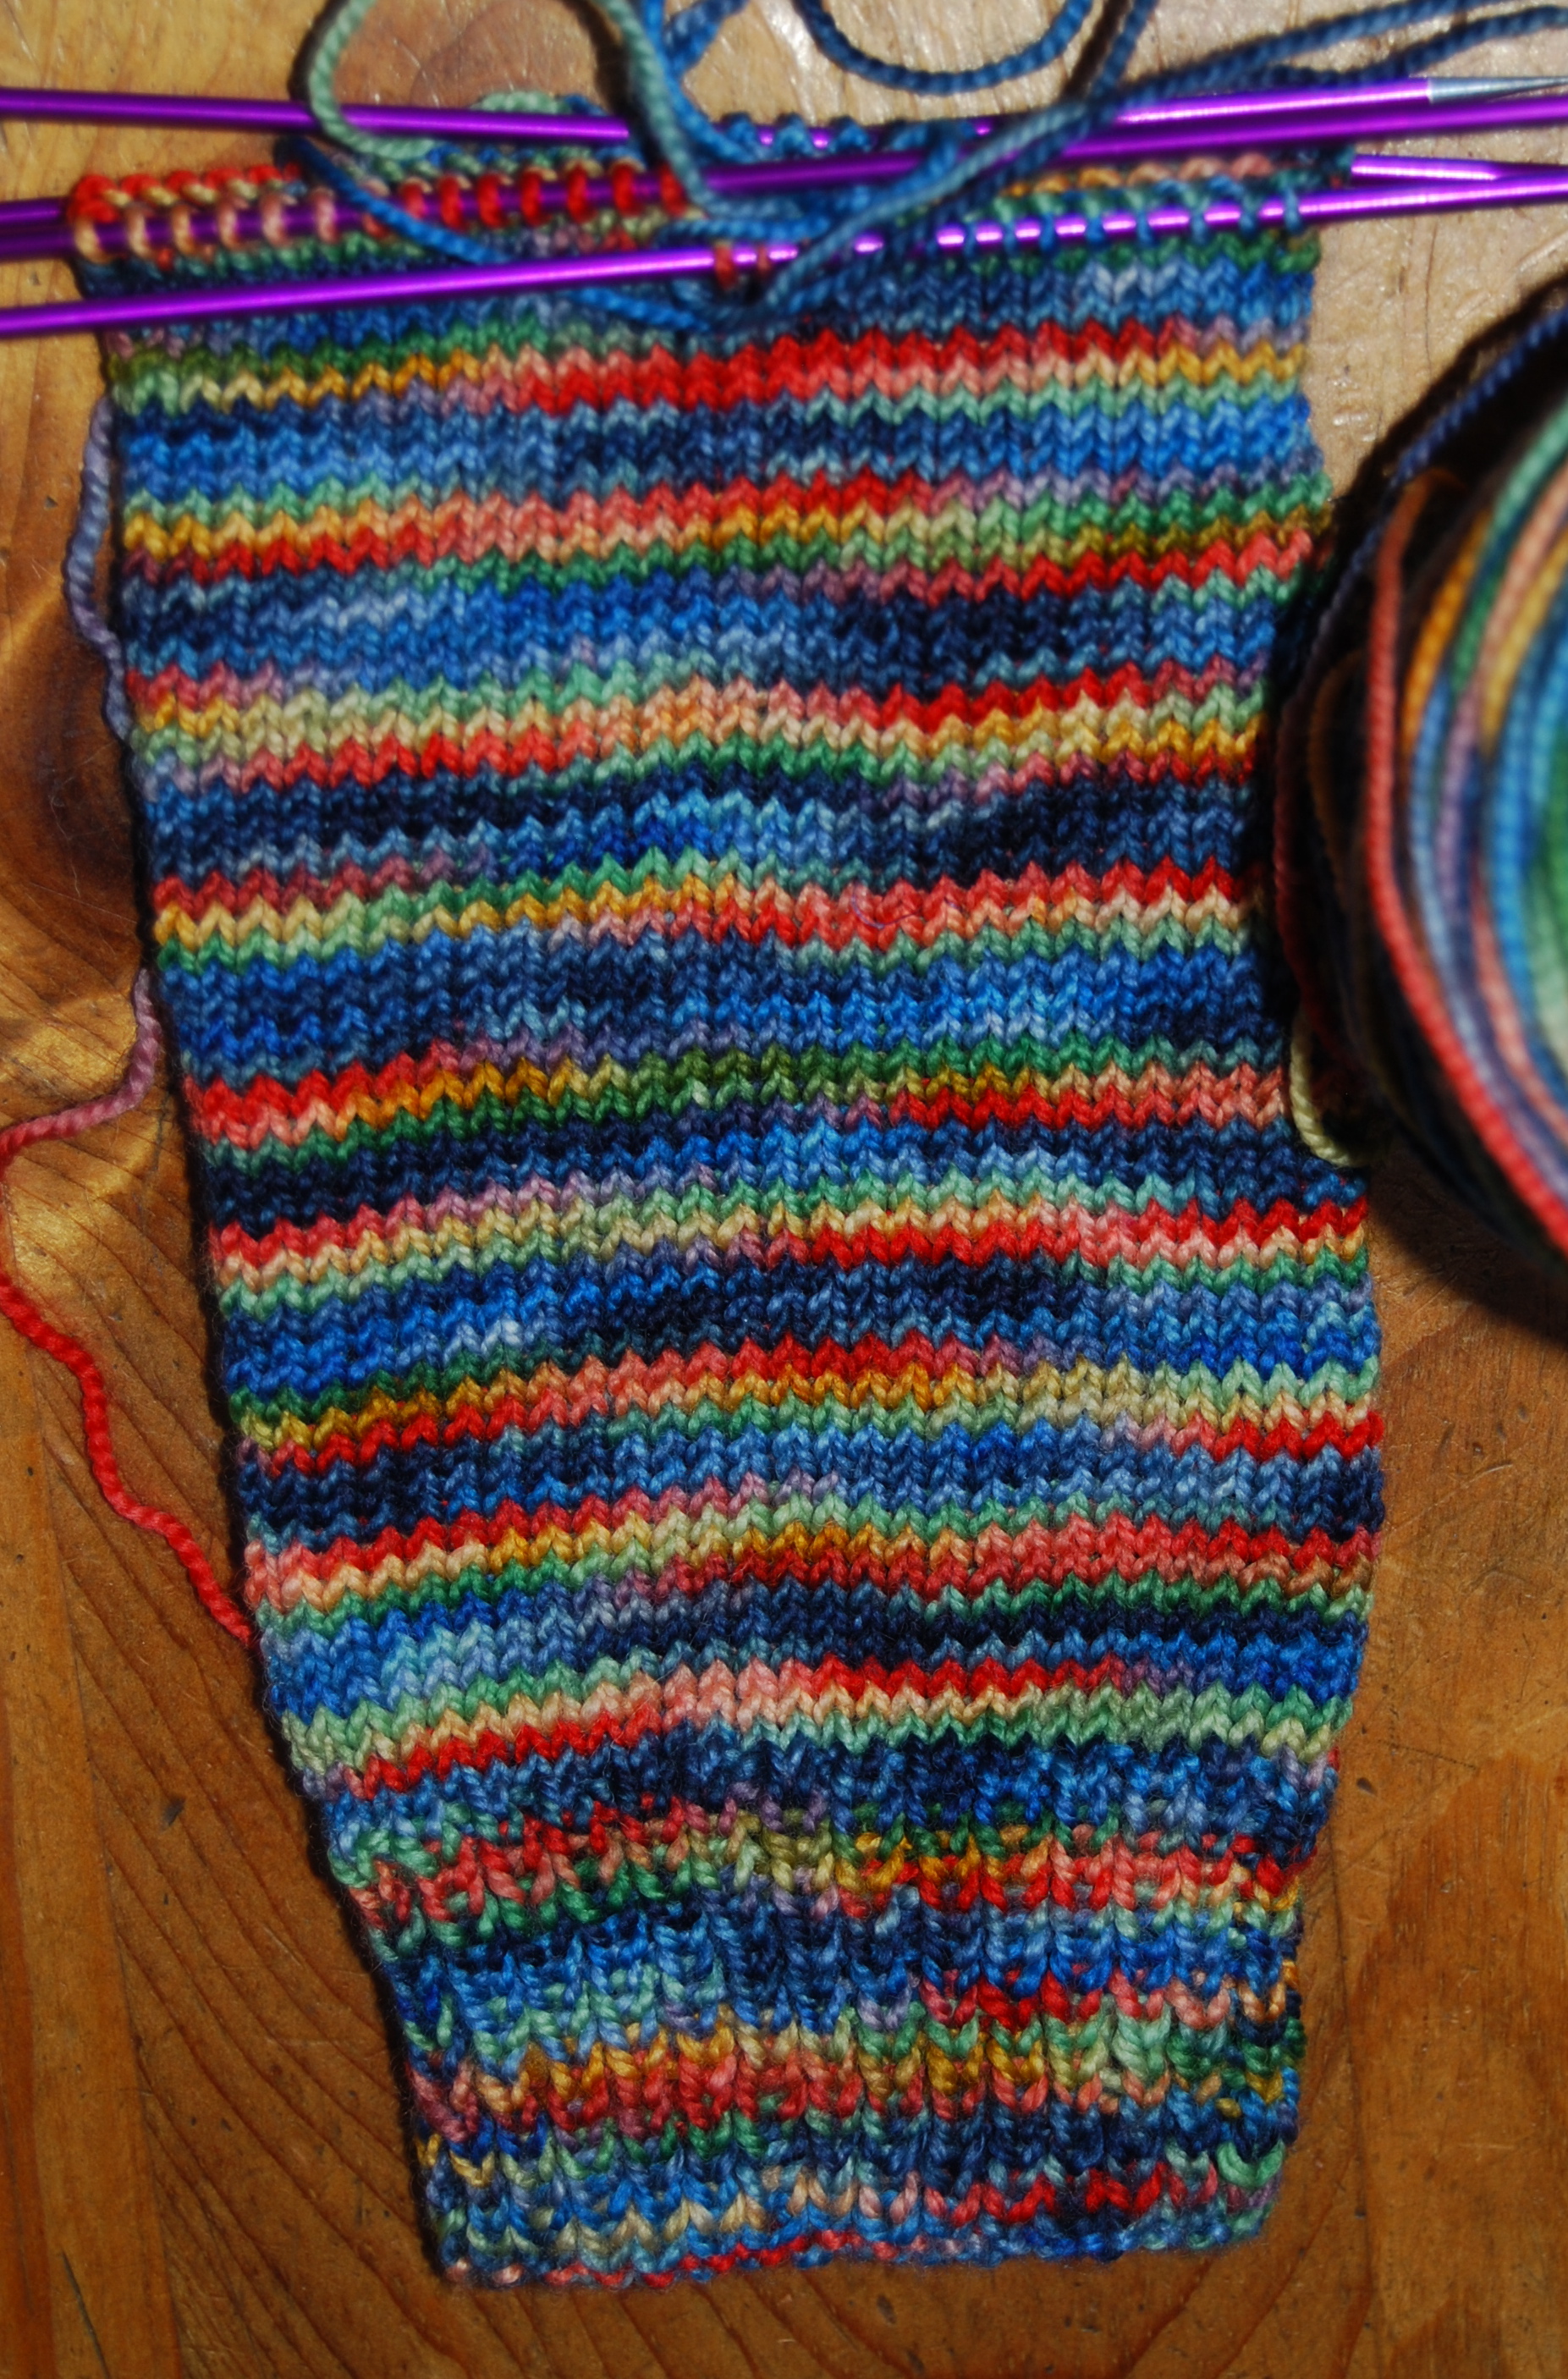 Koigu sock, 2nd attempt